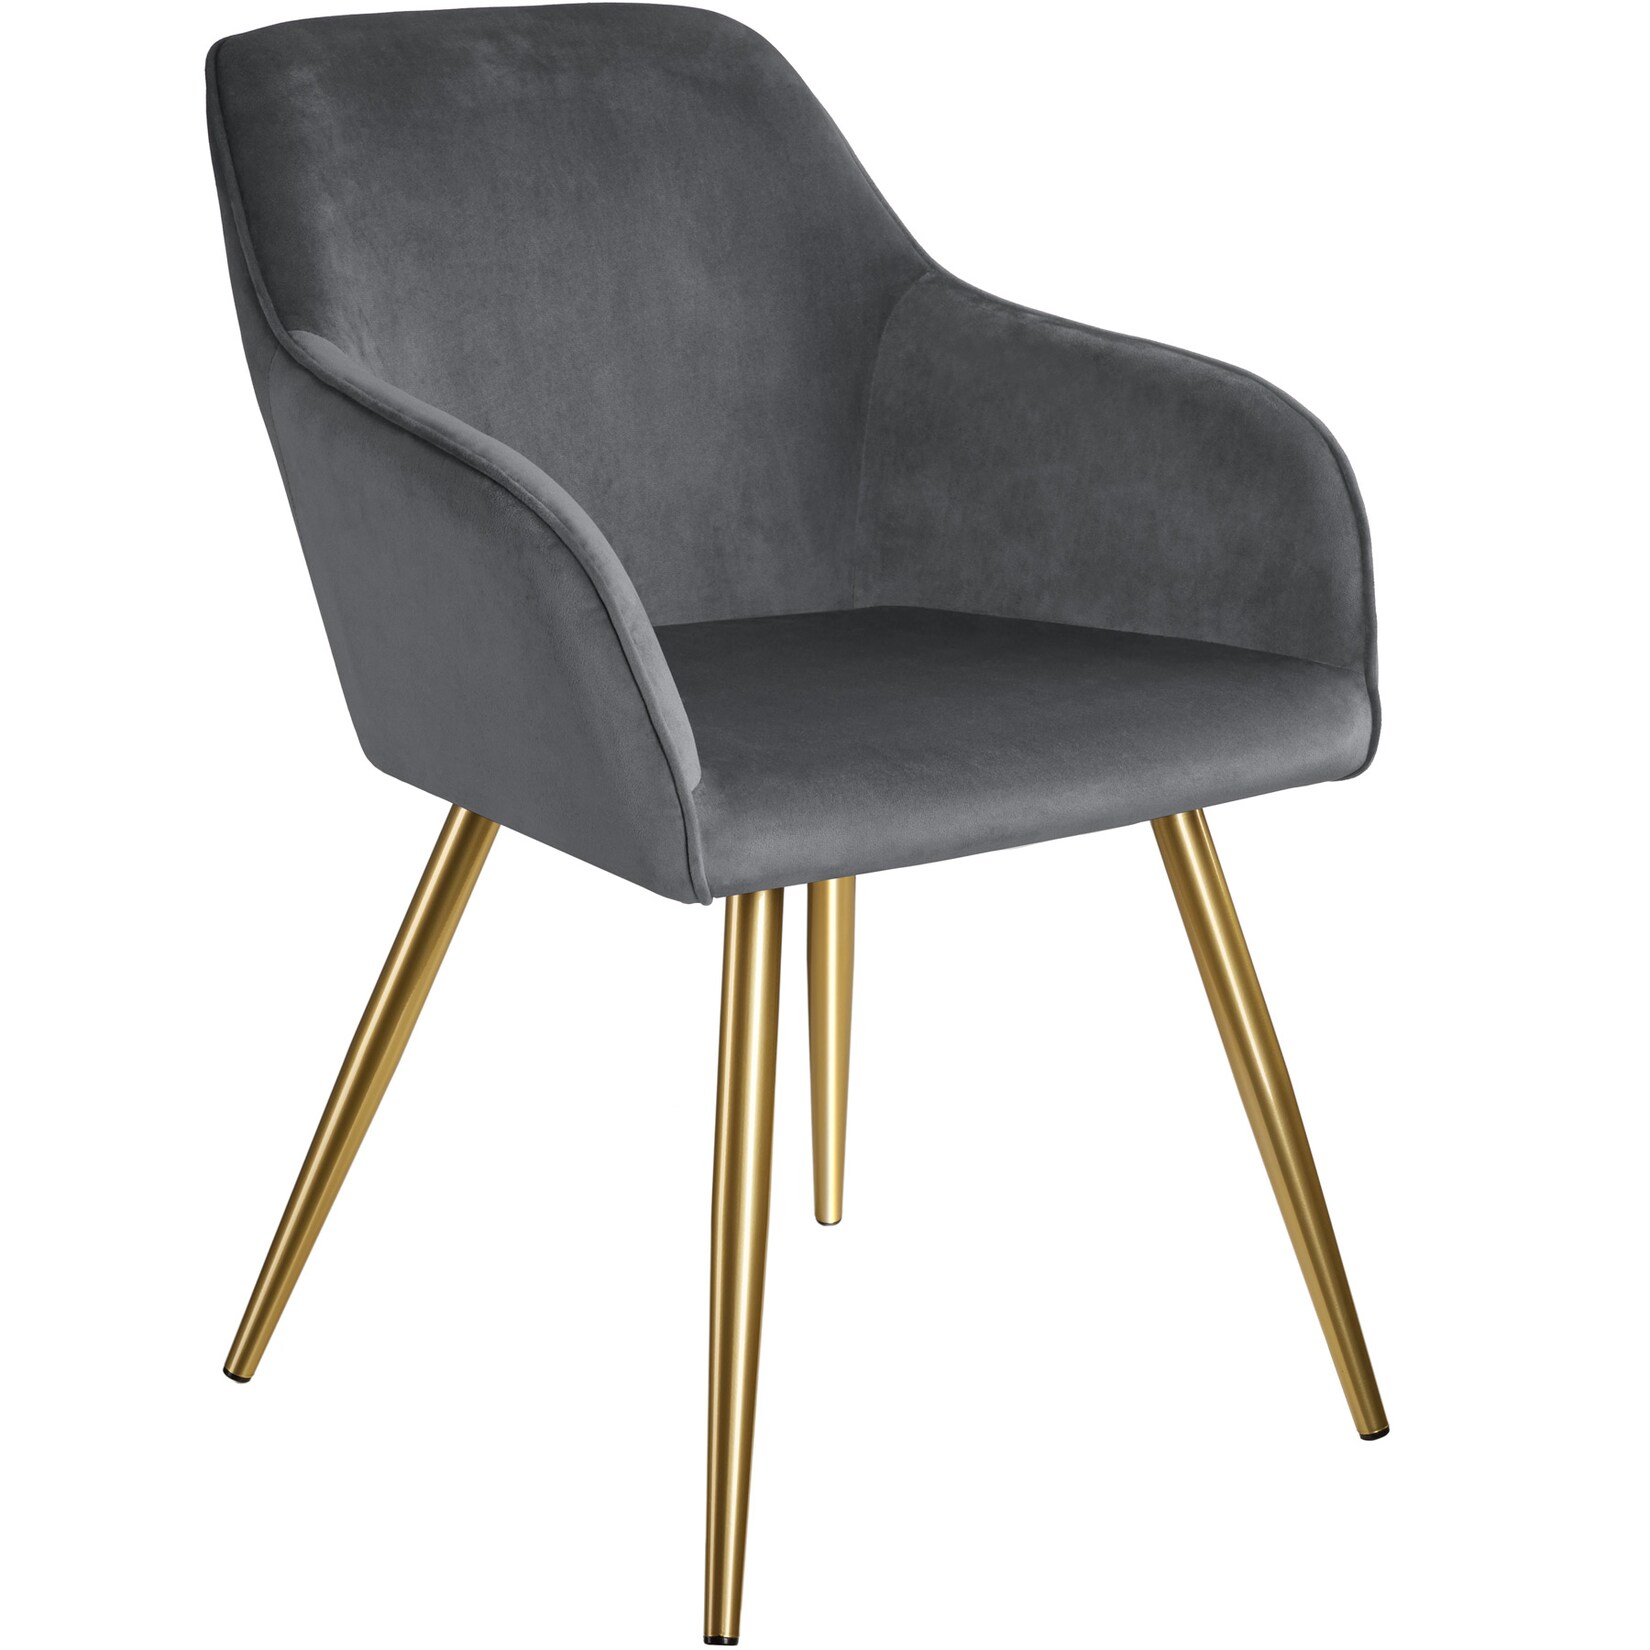 tectake® Stuhl, gepolstert, in Samtoptik, goldene Stahlbeine, 58 x 62 x 82 cm